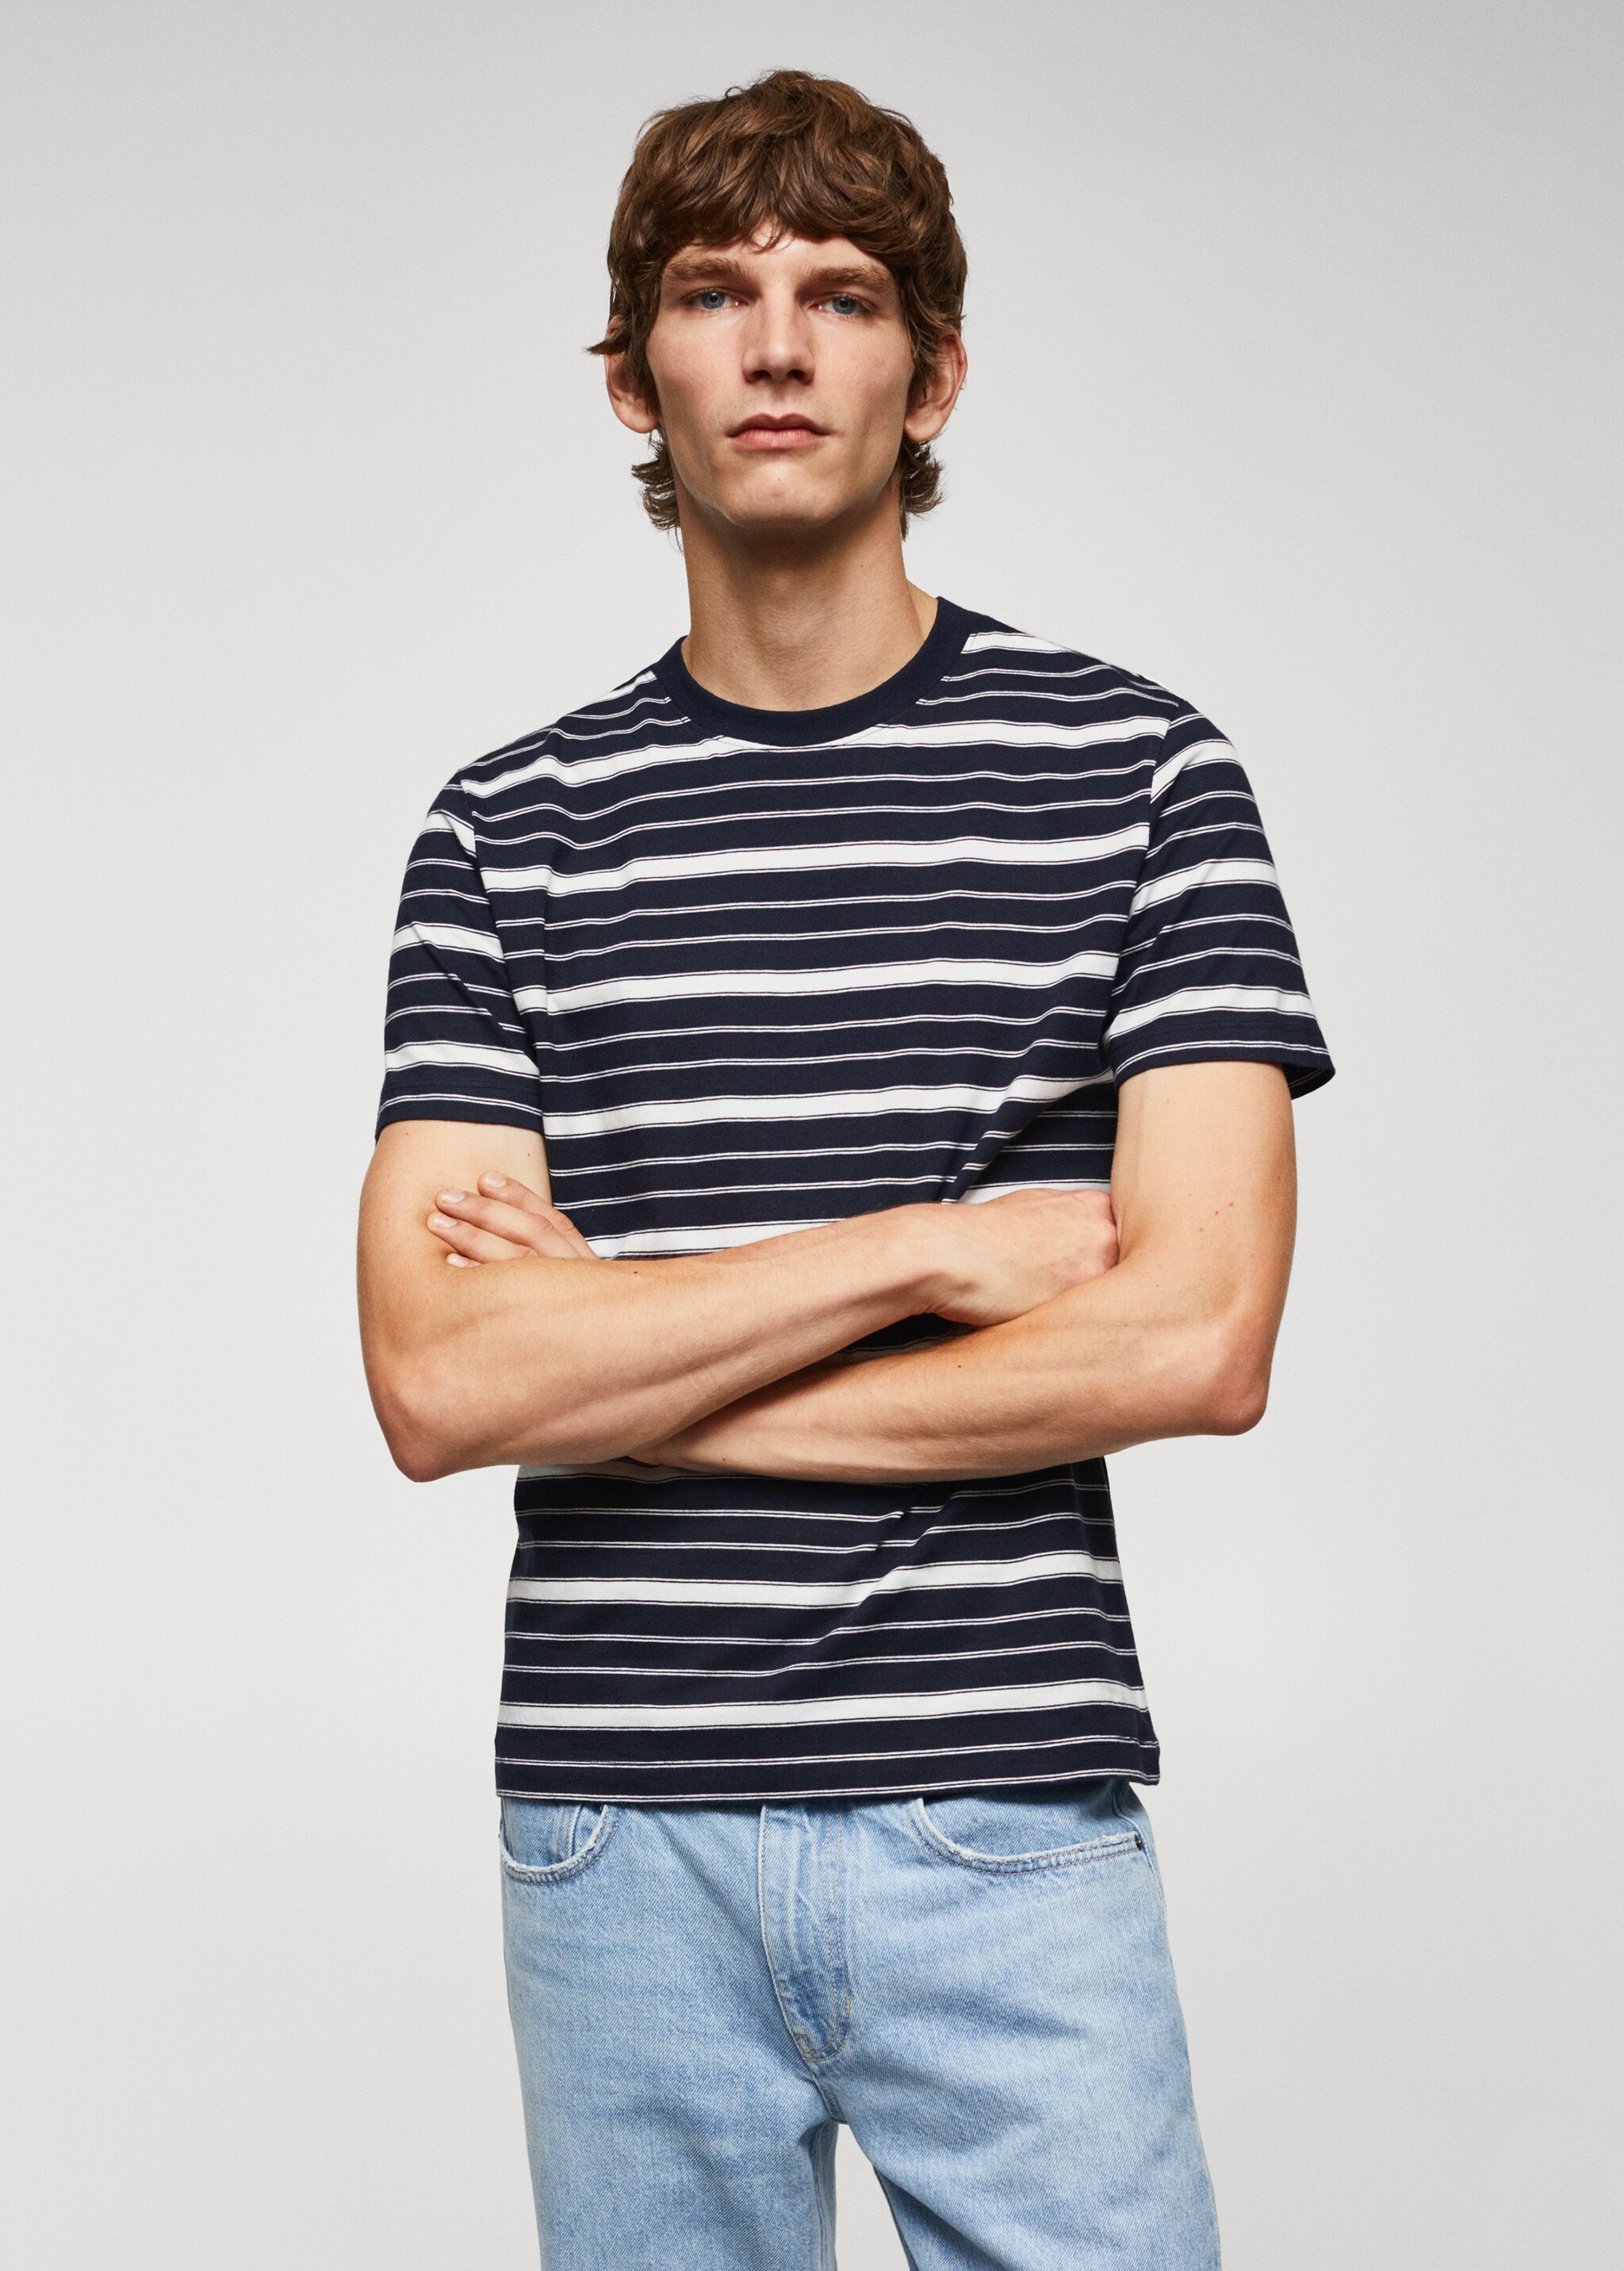 Striped 100% cotton t-shirt - Medium plane